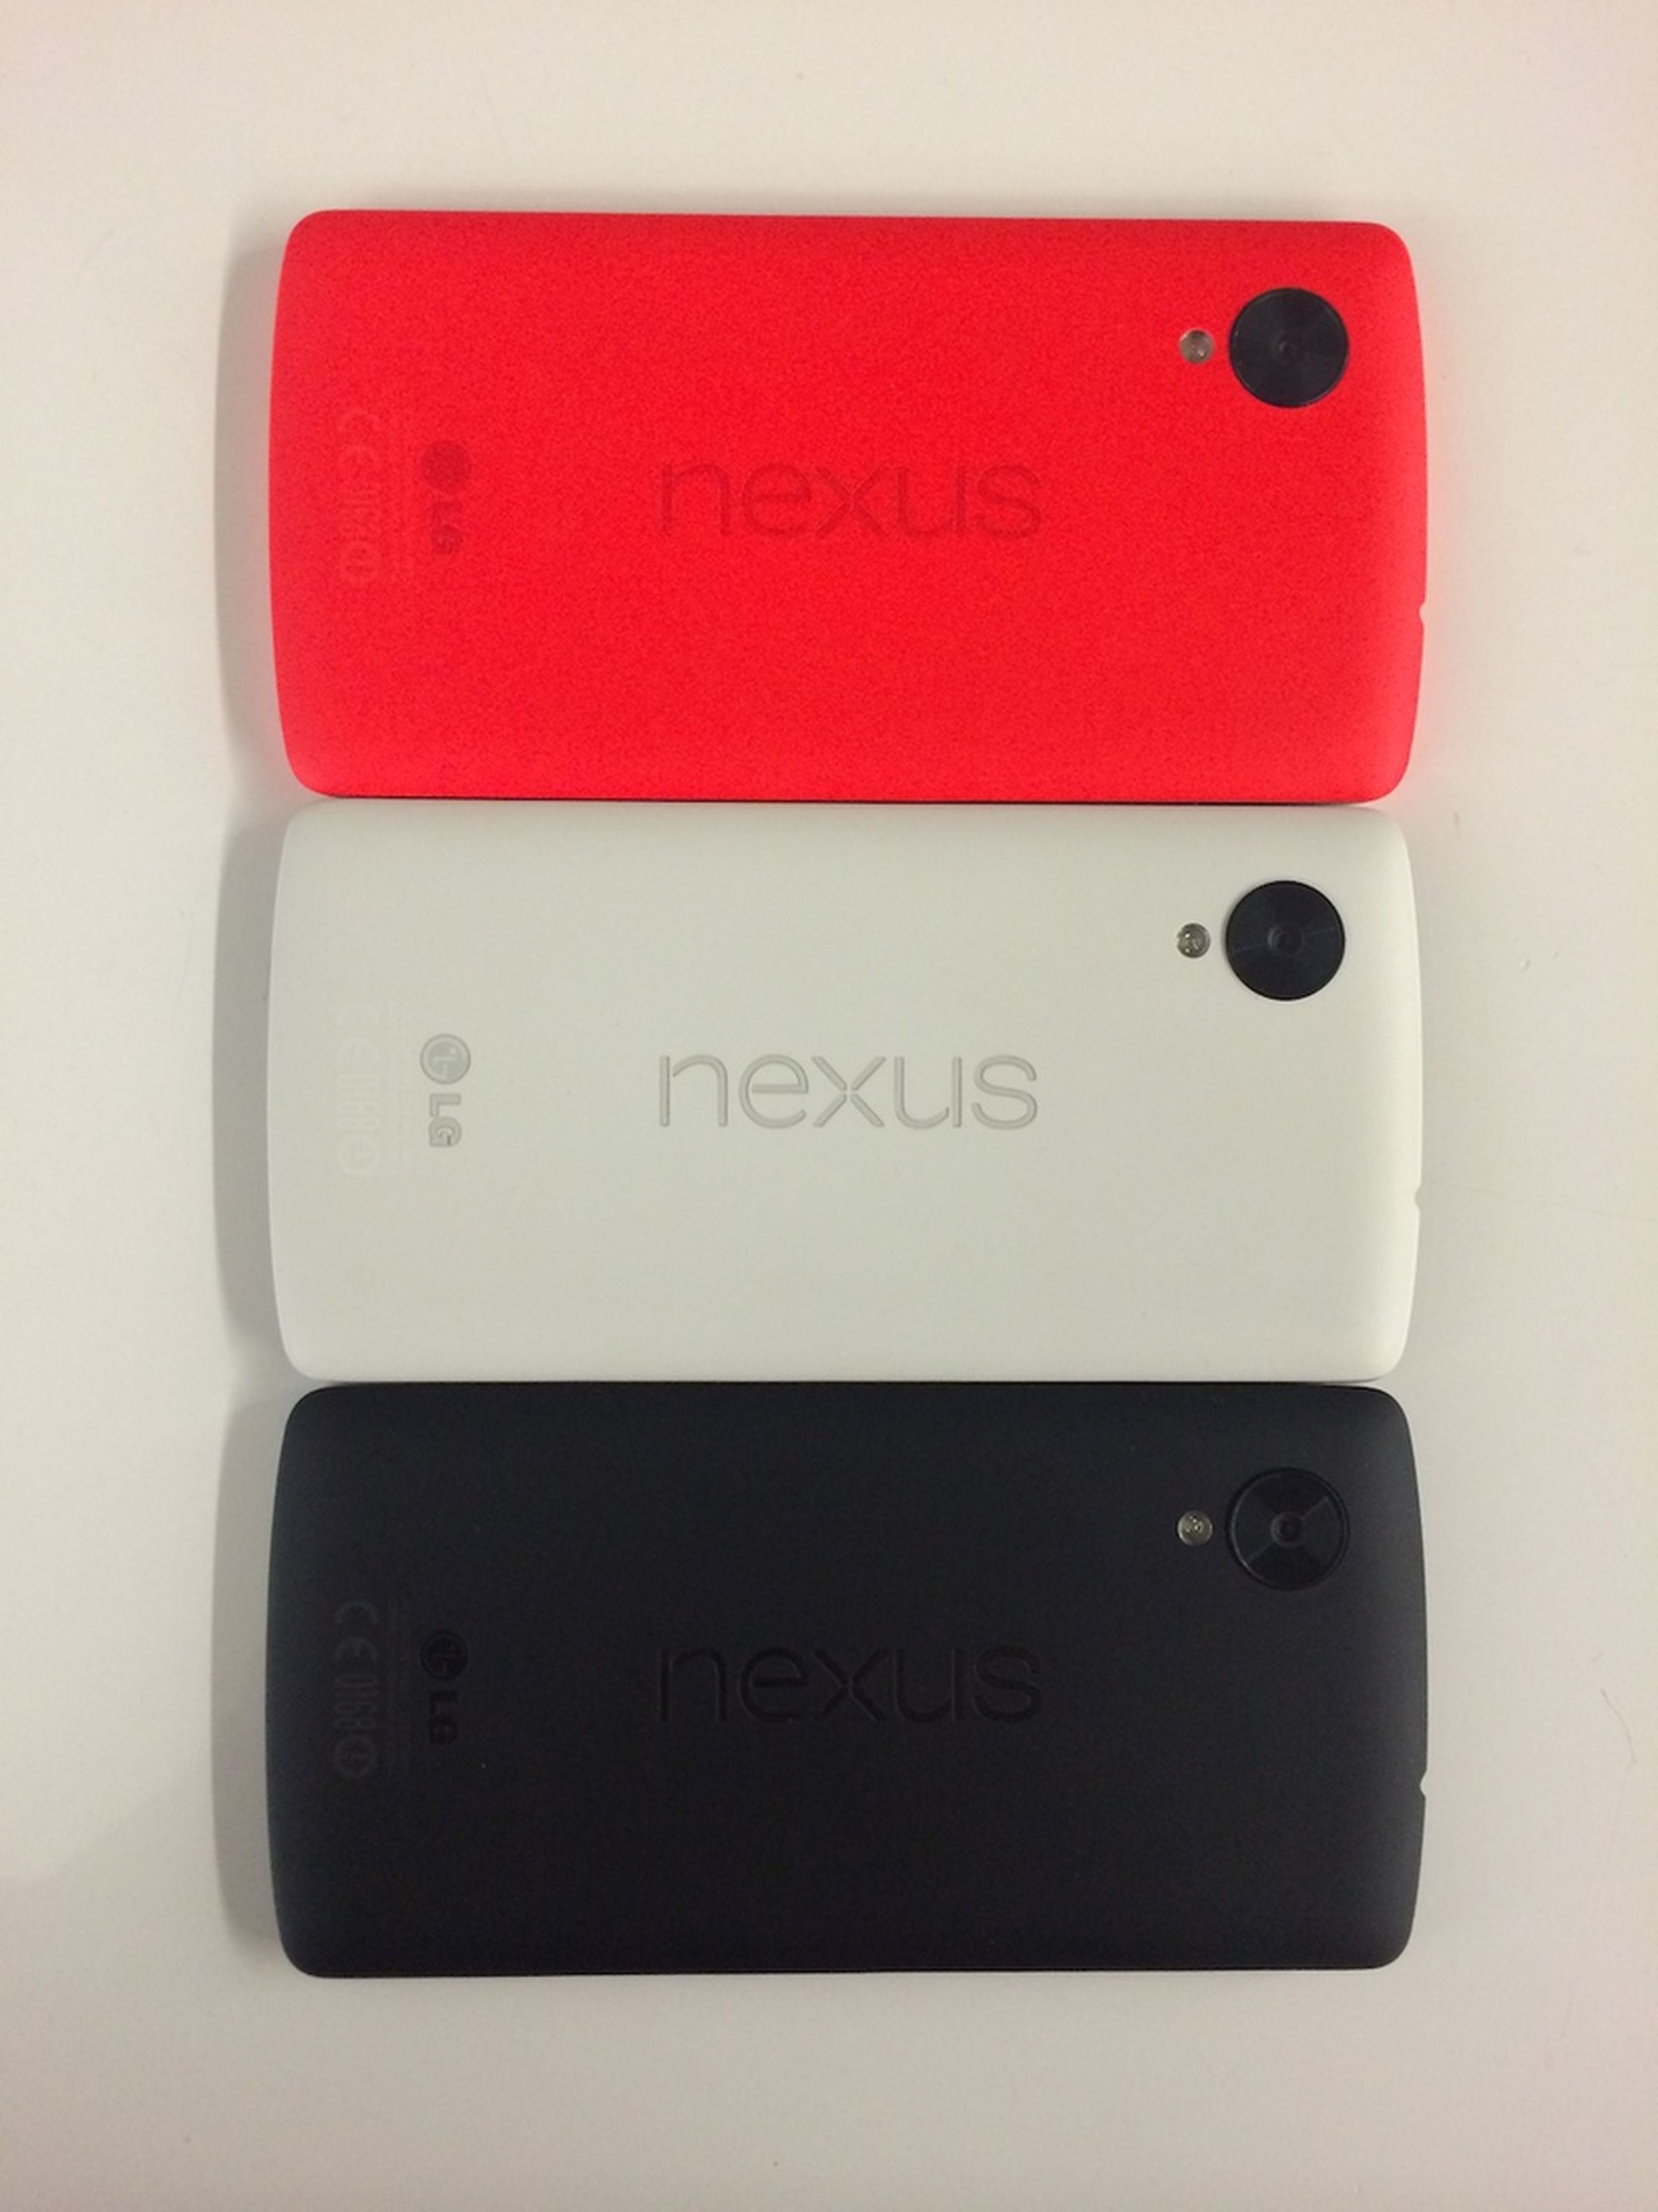 Nexus 5 family photos